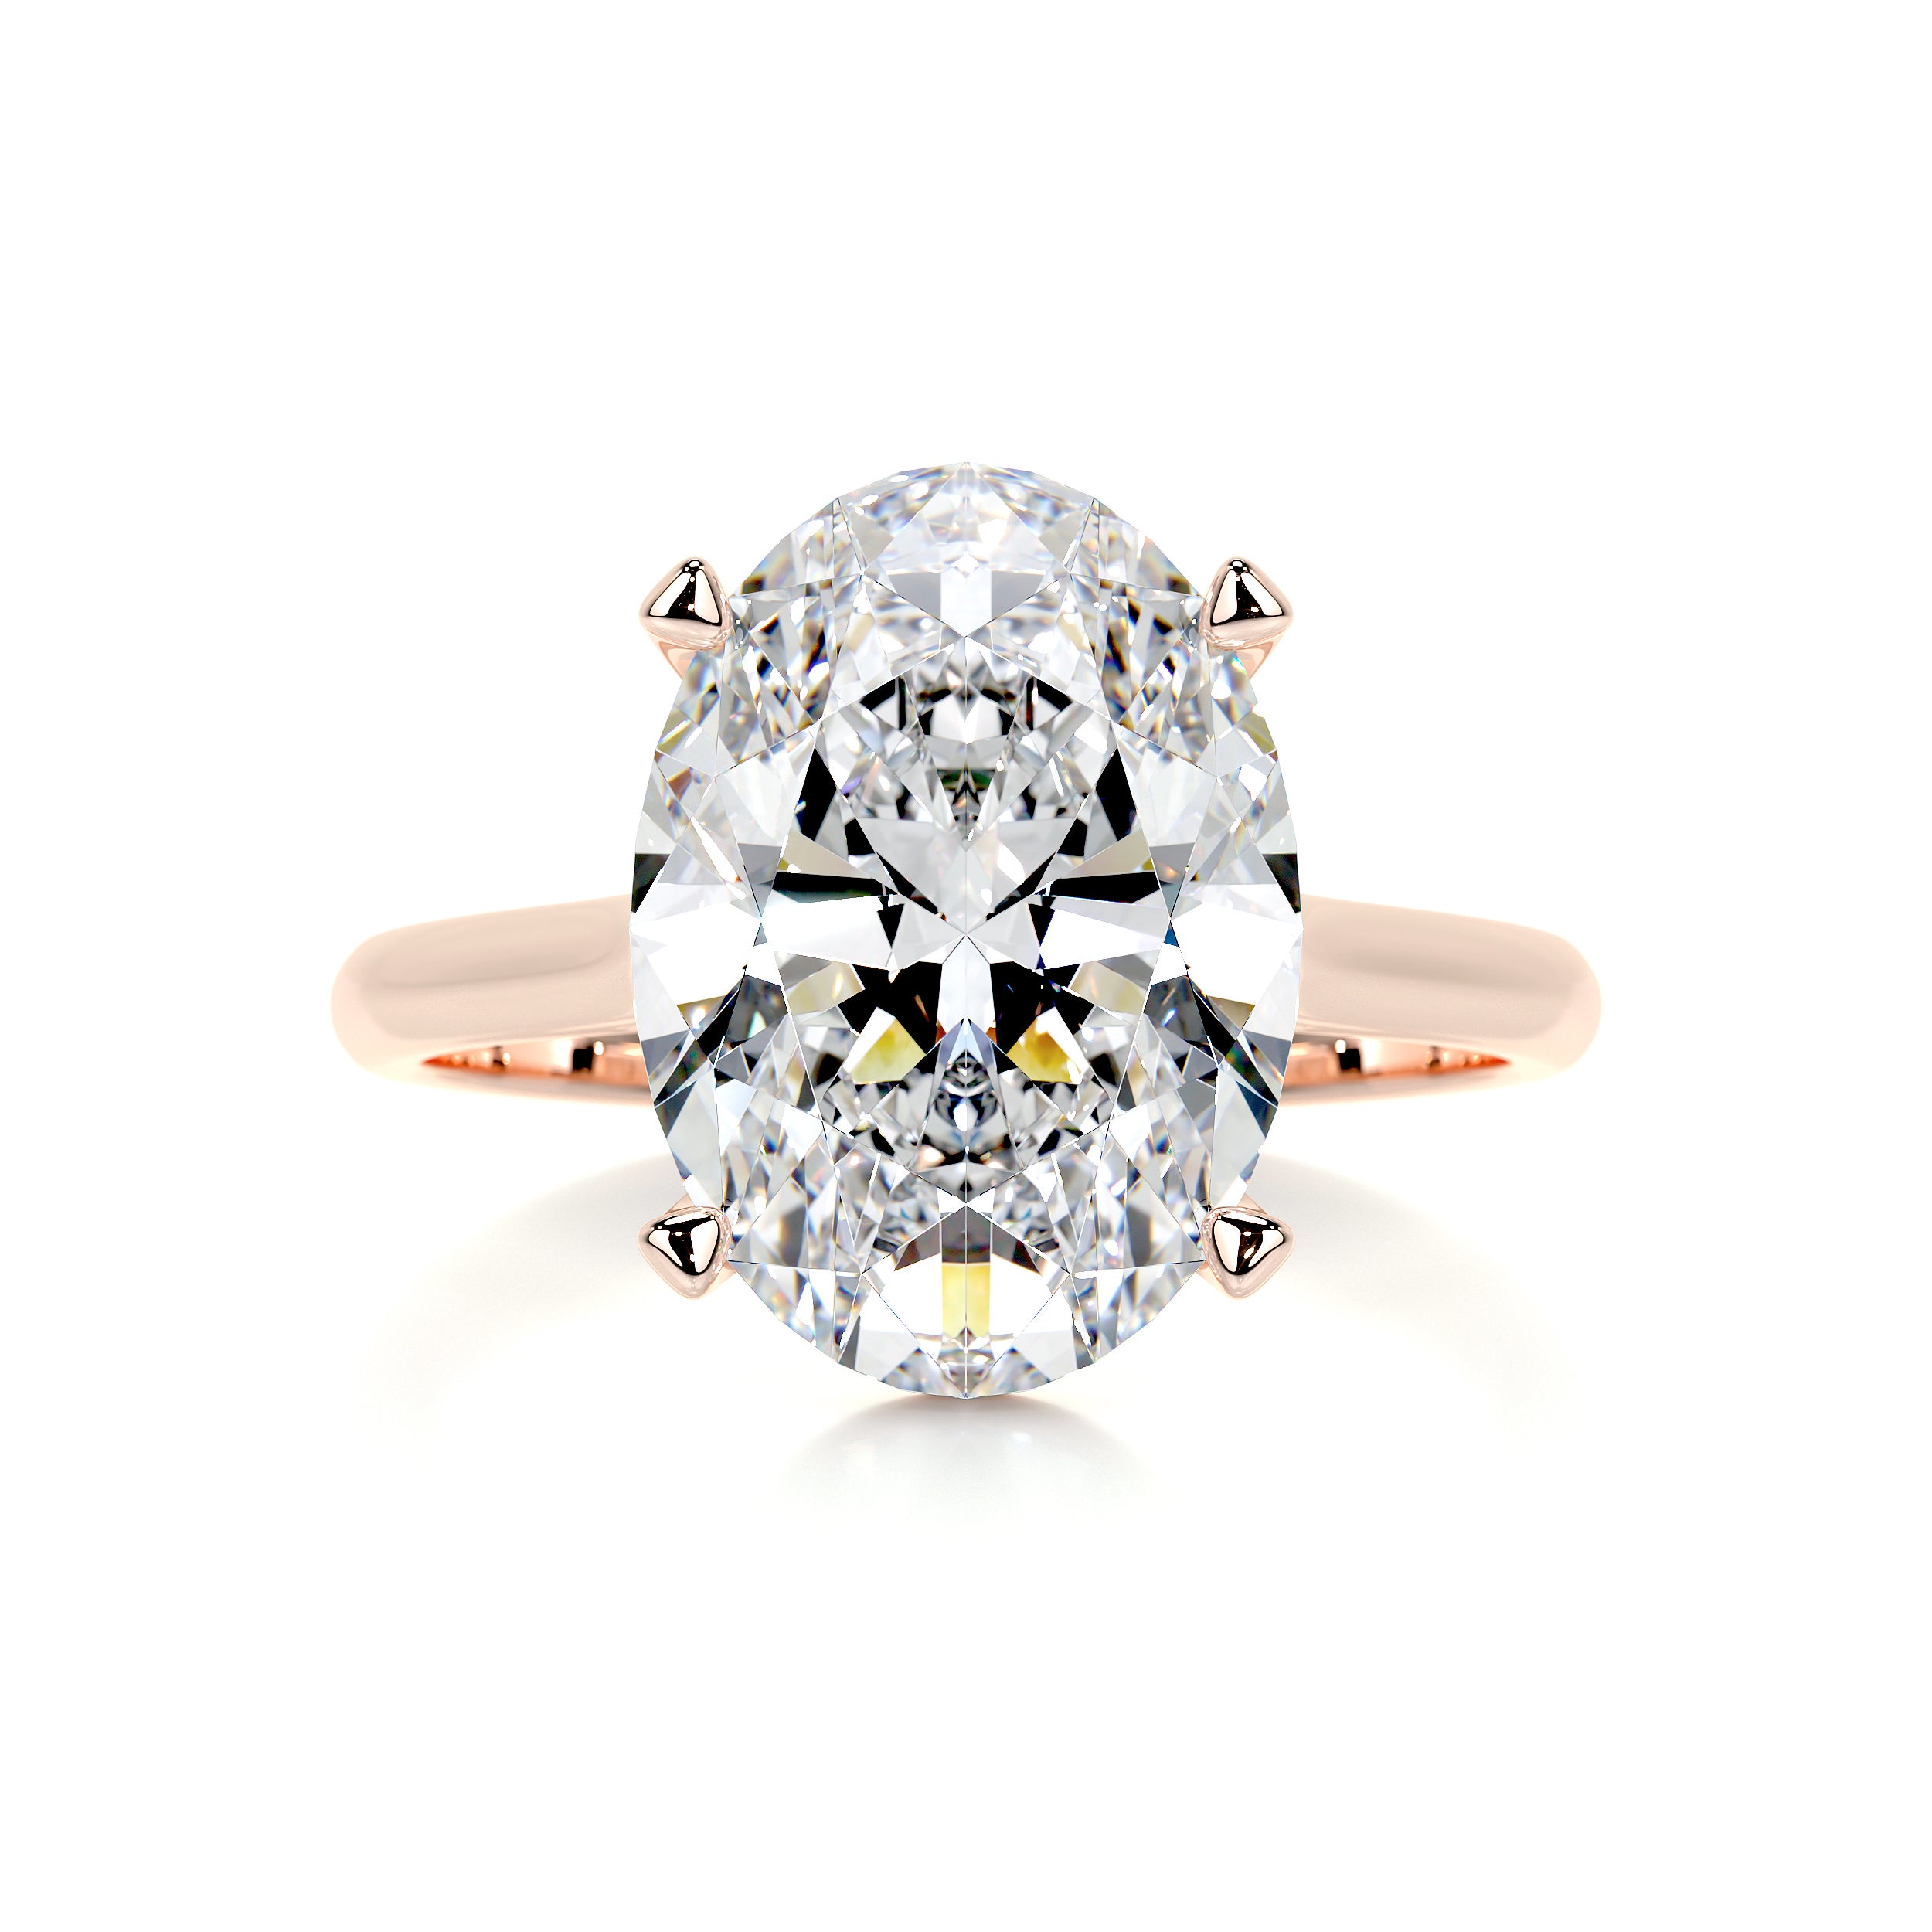 7 Carat Radiant Cut Engagement Ring - Custom by Genesis Diamonds - YouTube